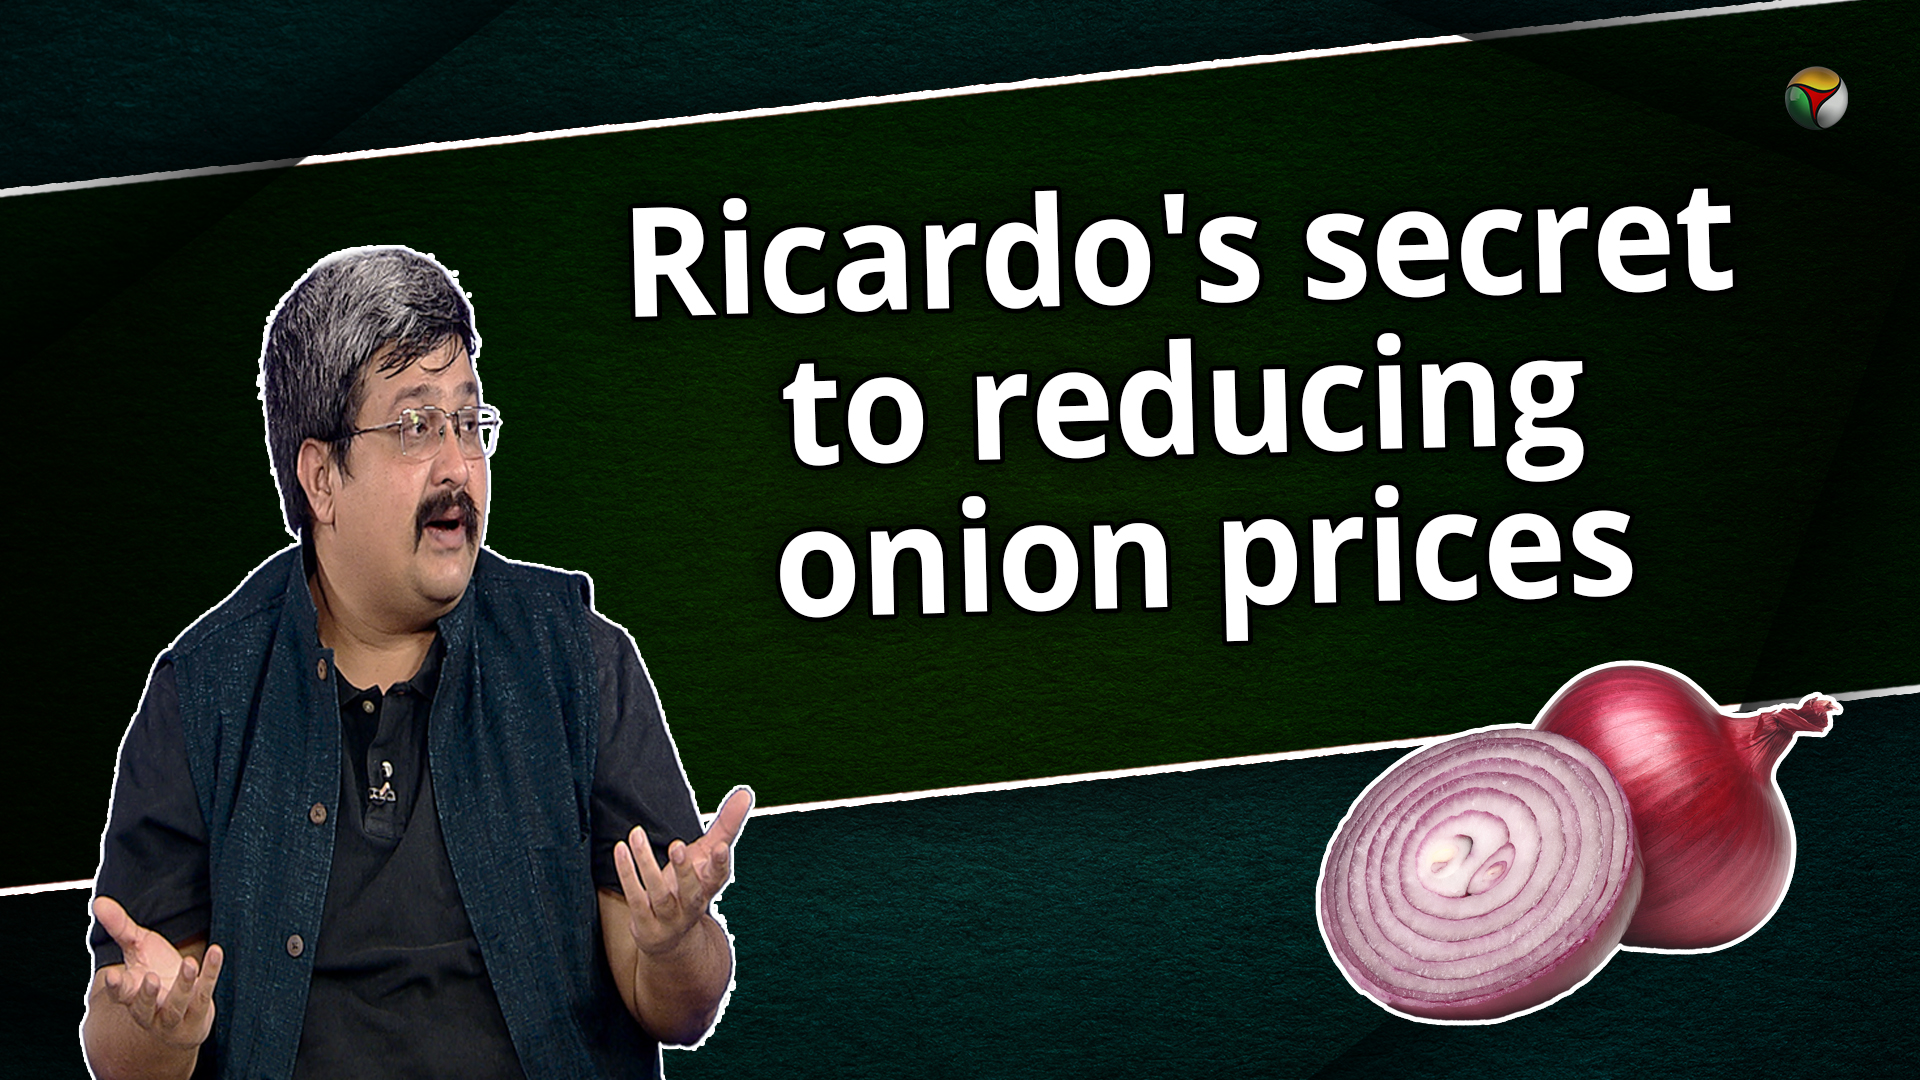 Ricardos secret to reducing onion prices